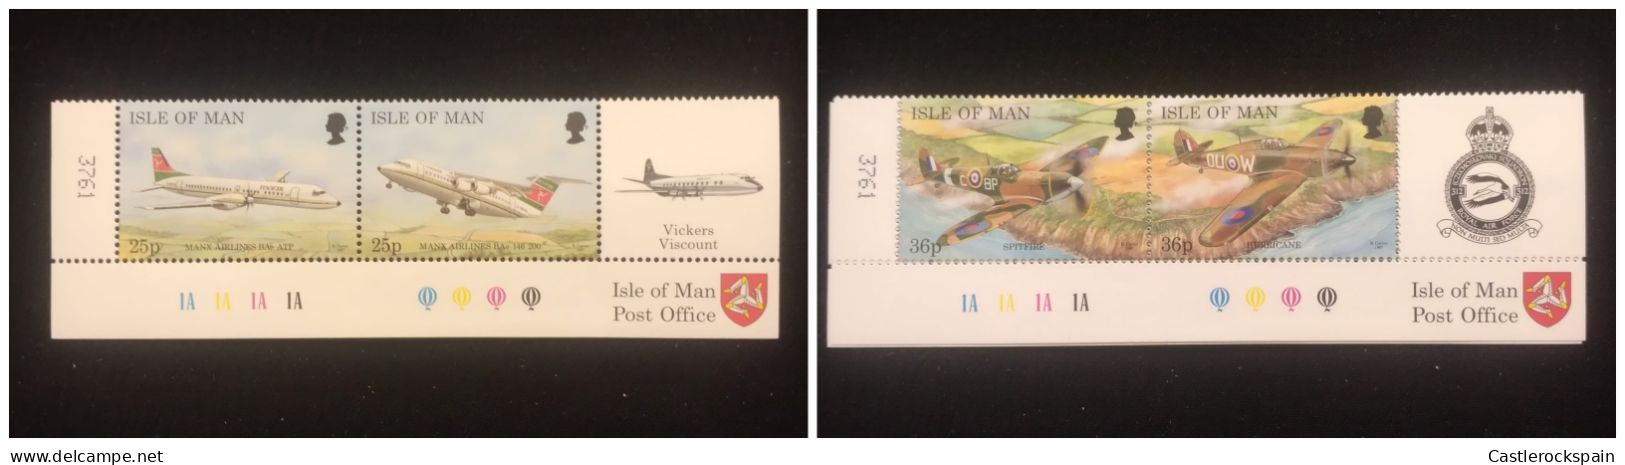 O) 1997 ISLE OF MAN, AIRCRAFT, MANX AIRLINES RA  ATP, RA 146 200, SPITFIRE, HURRICANE, MNH - Isle Of Man